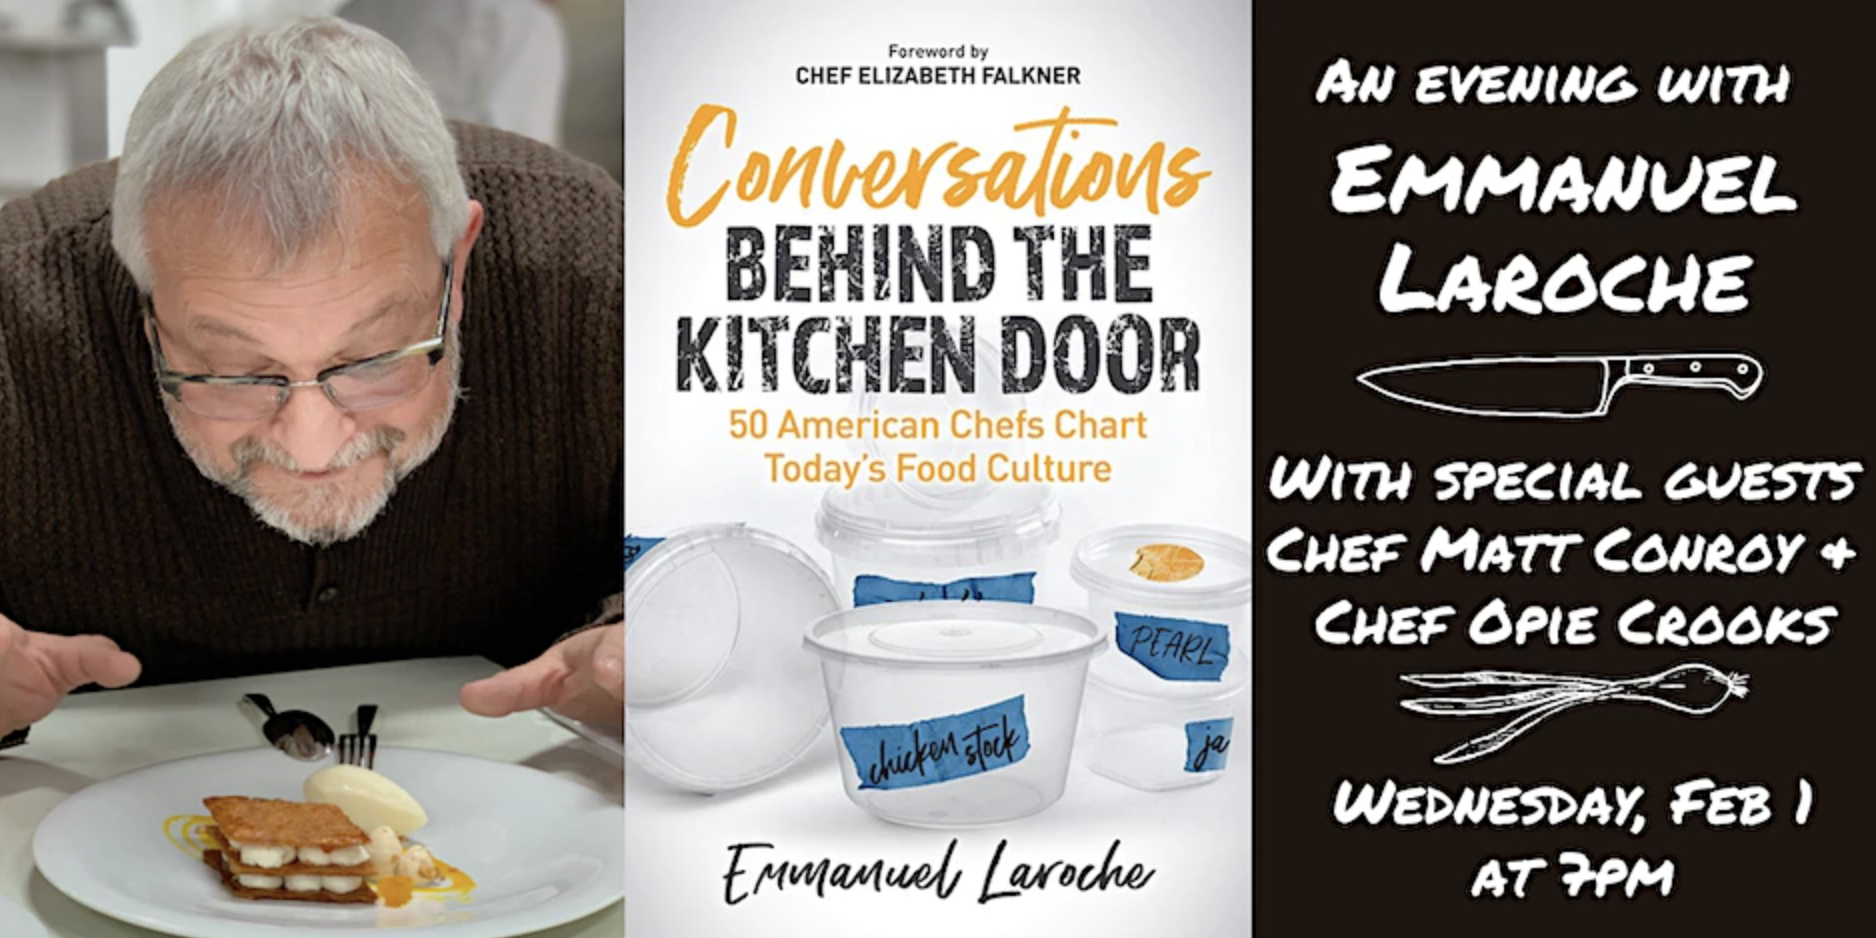 A Conversation Behind the Kitchen Doors with Emmanuel Laroche & Friends